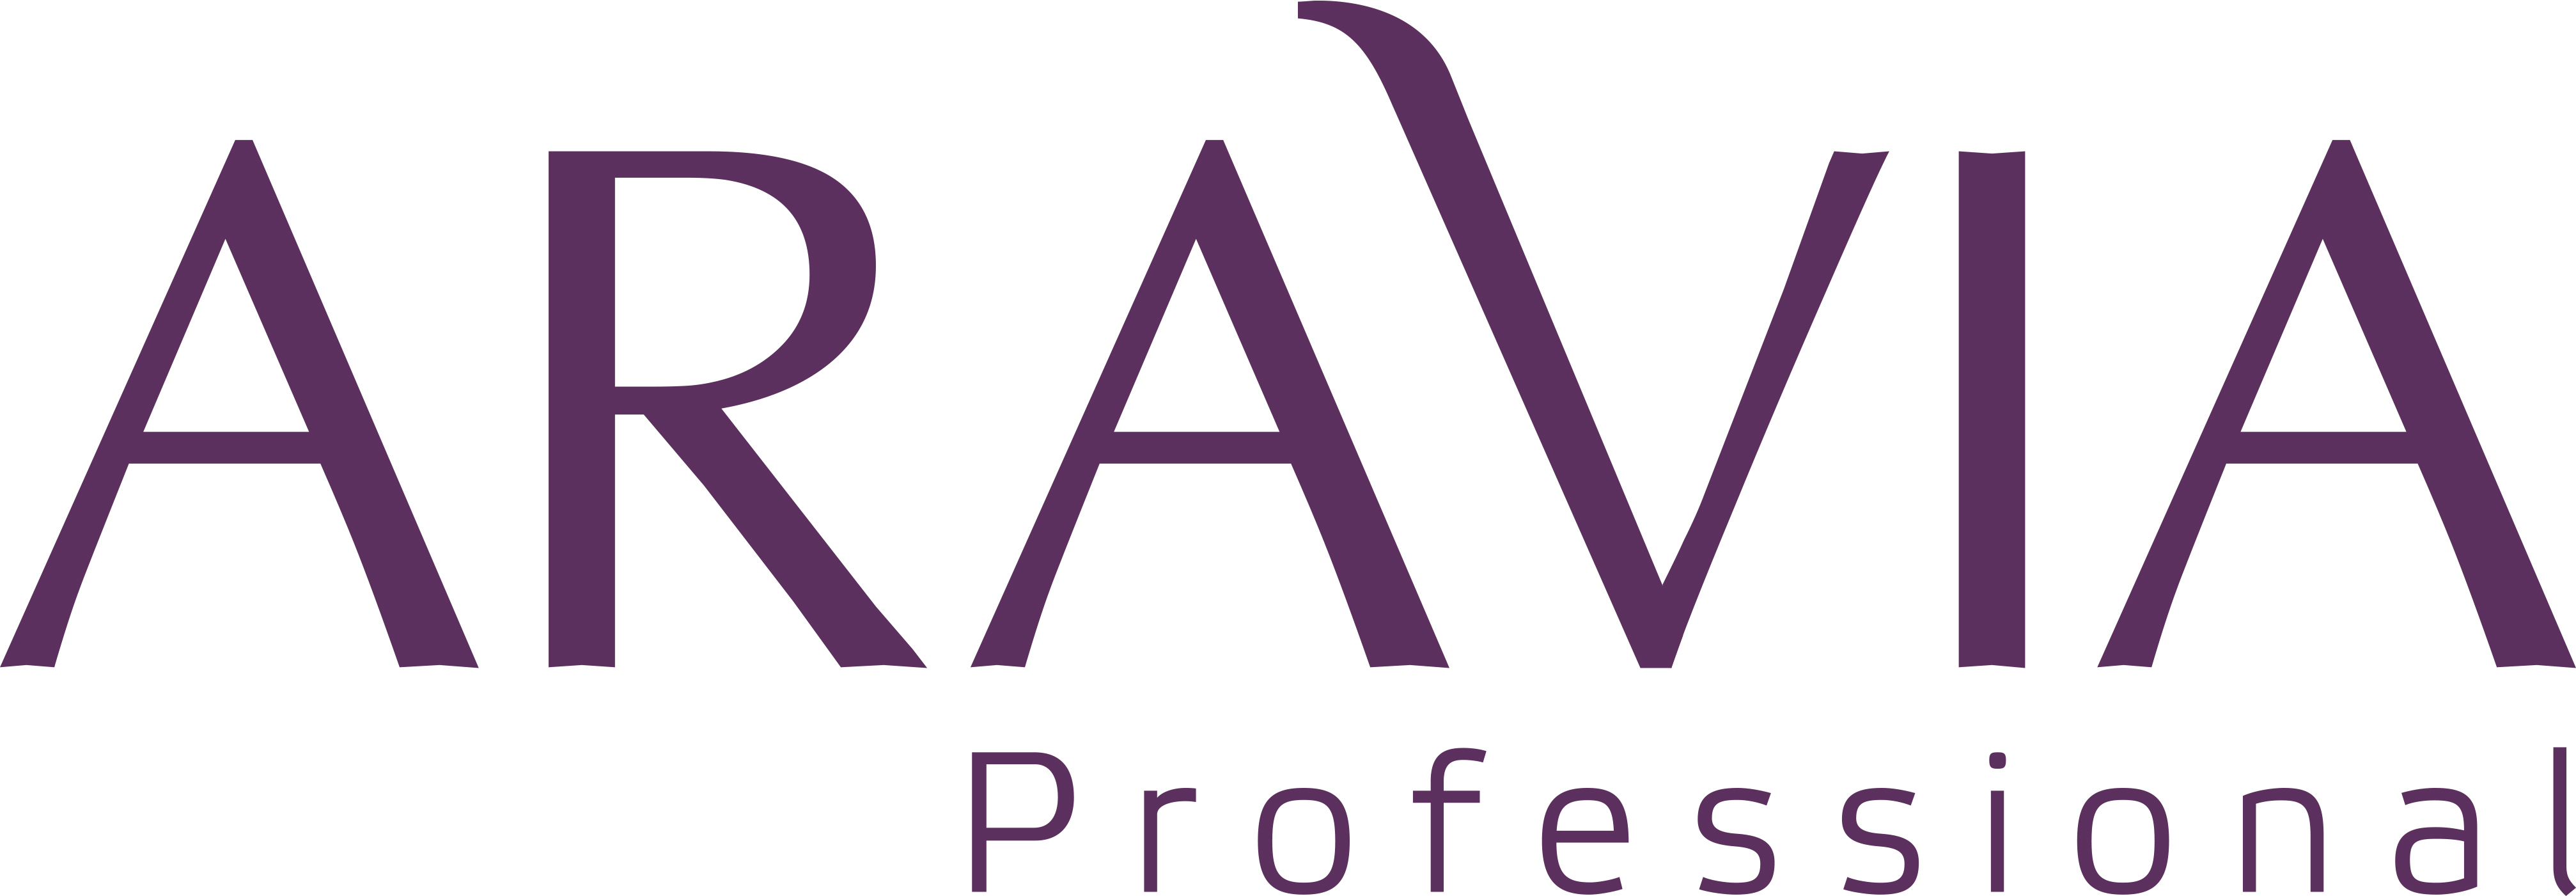 Косметика бренда ARAVIA PROFESSIONAL, логотип